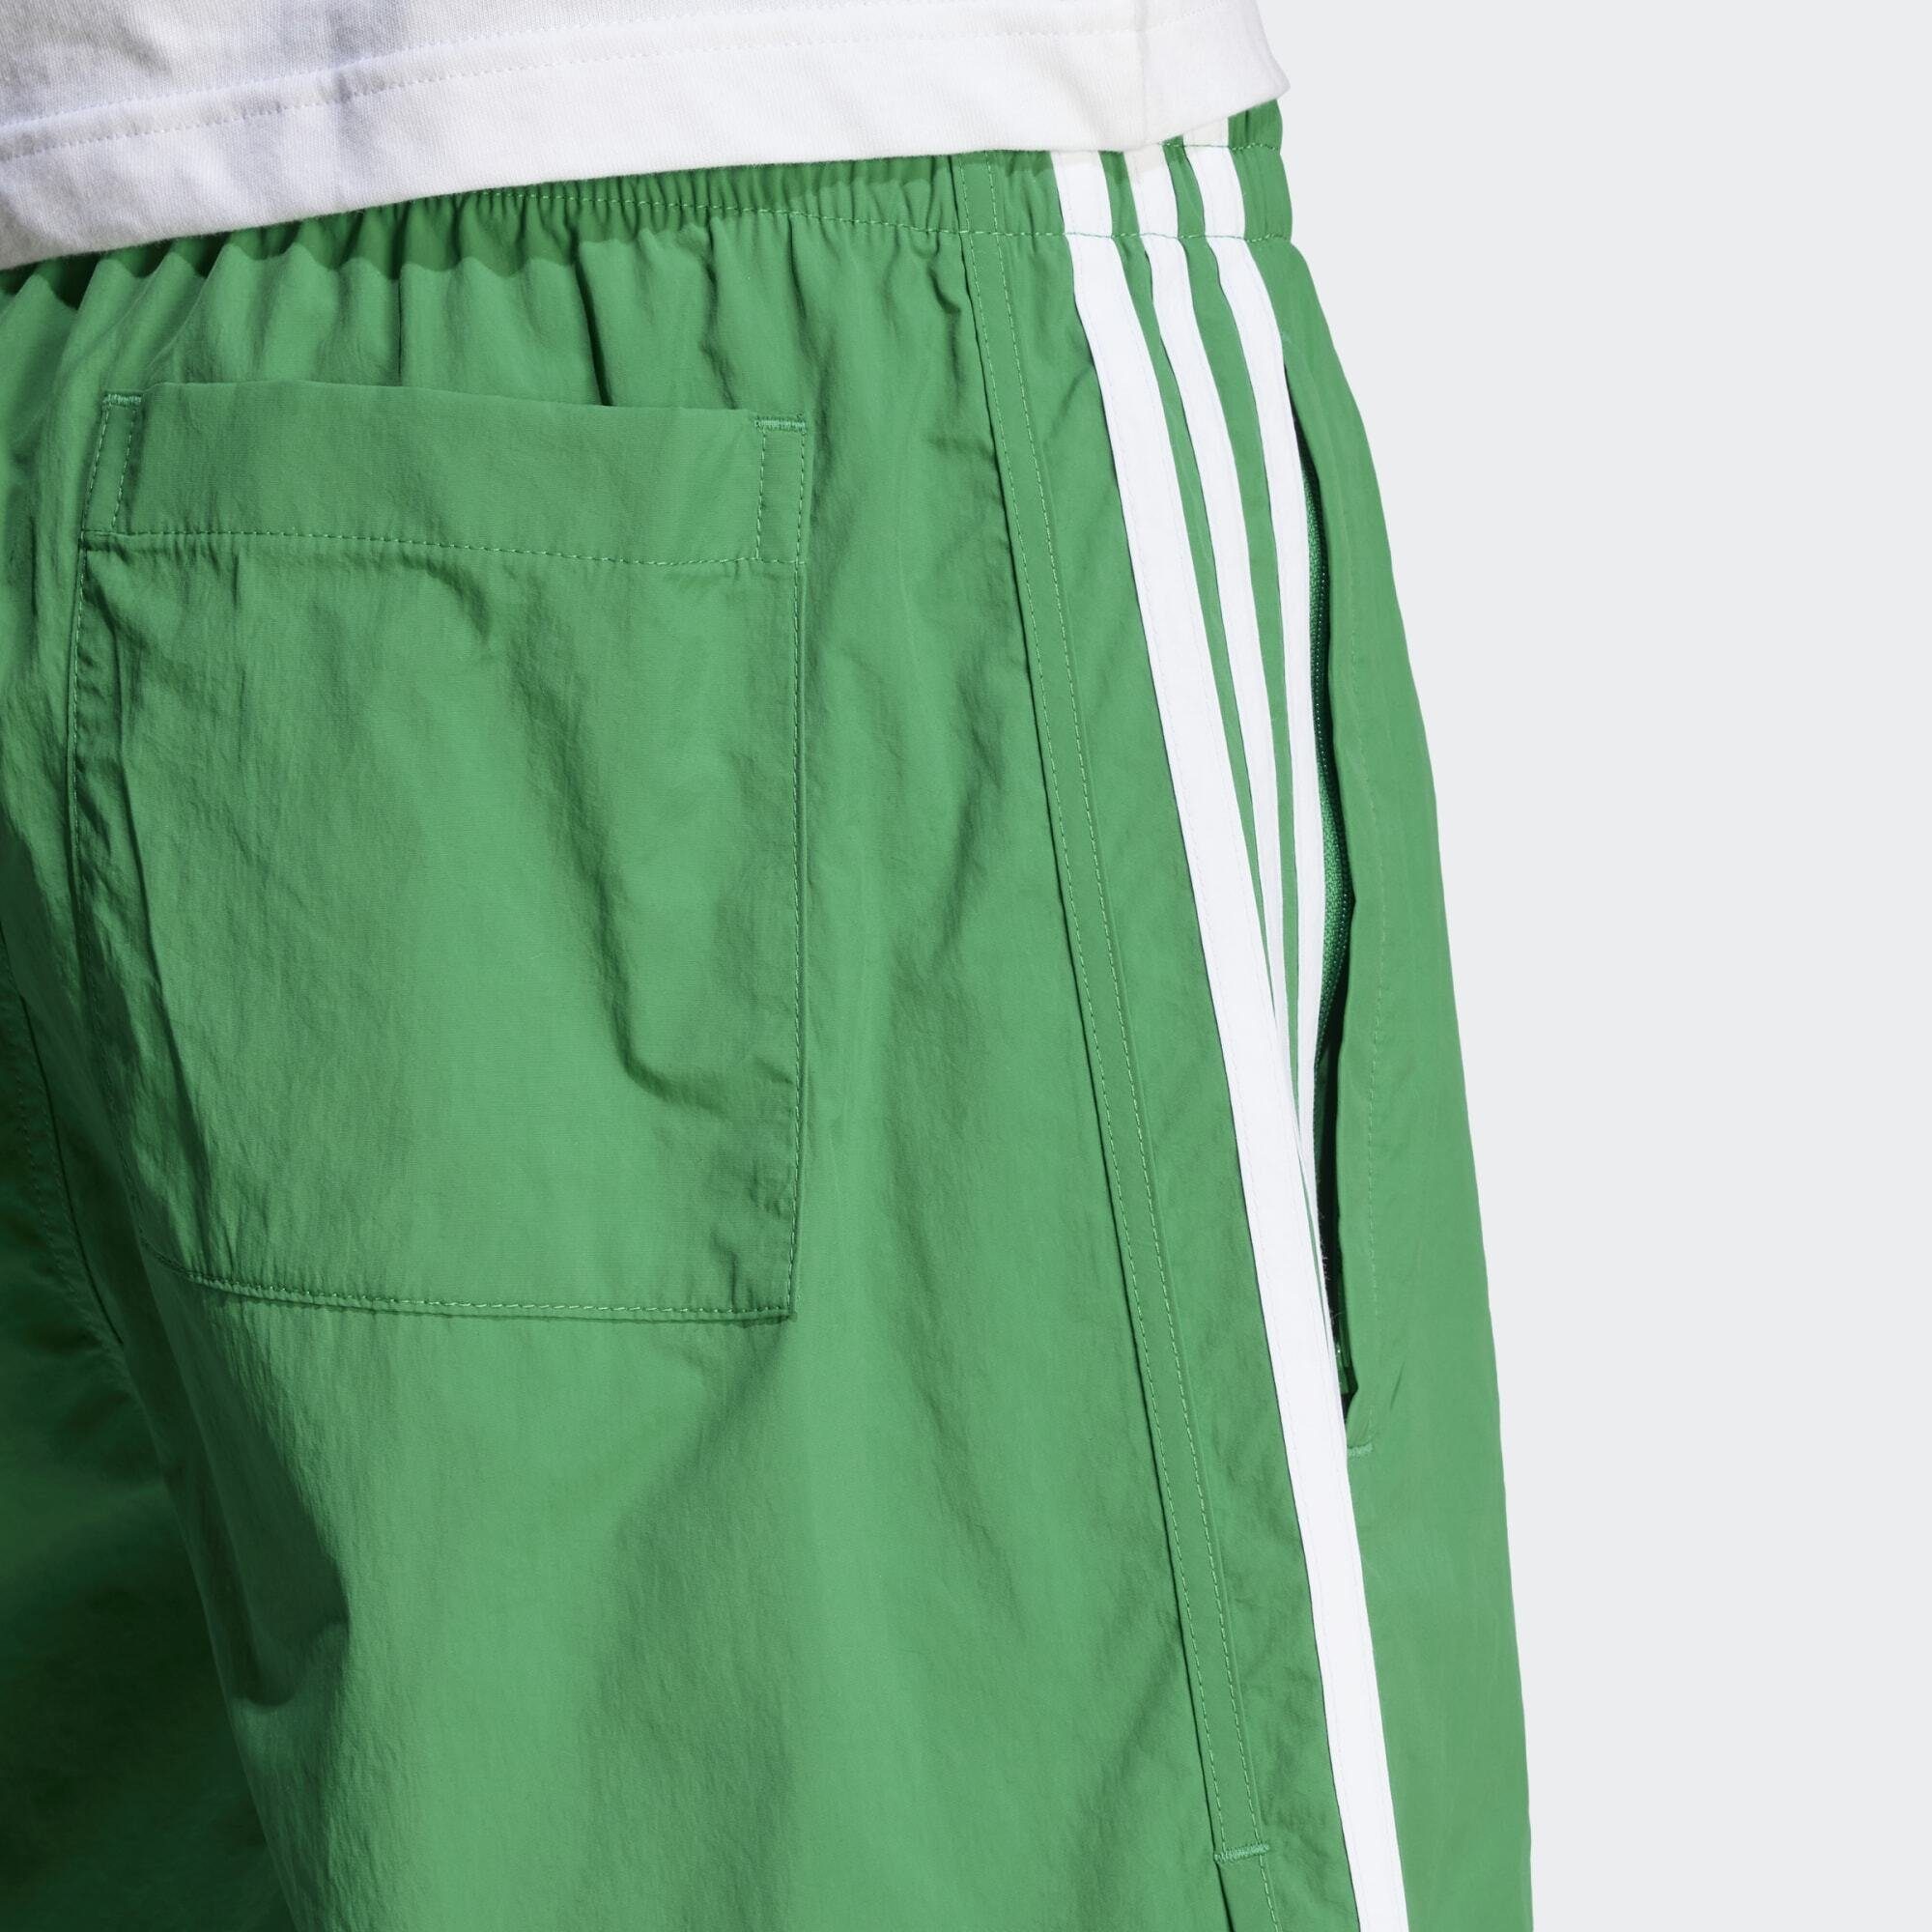 CLASSICS Green SHORTS SPRINTER Funktionsshorts ADICOLOR Originals adidas